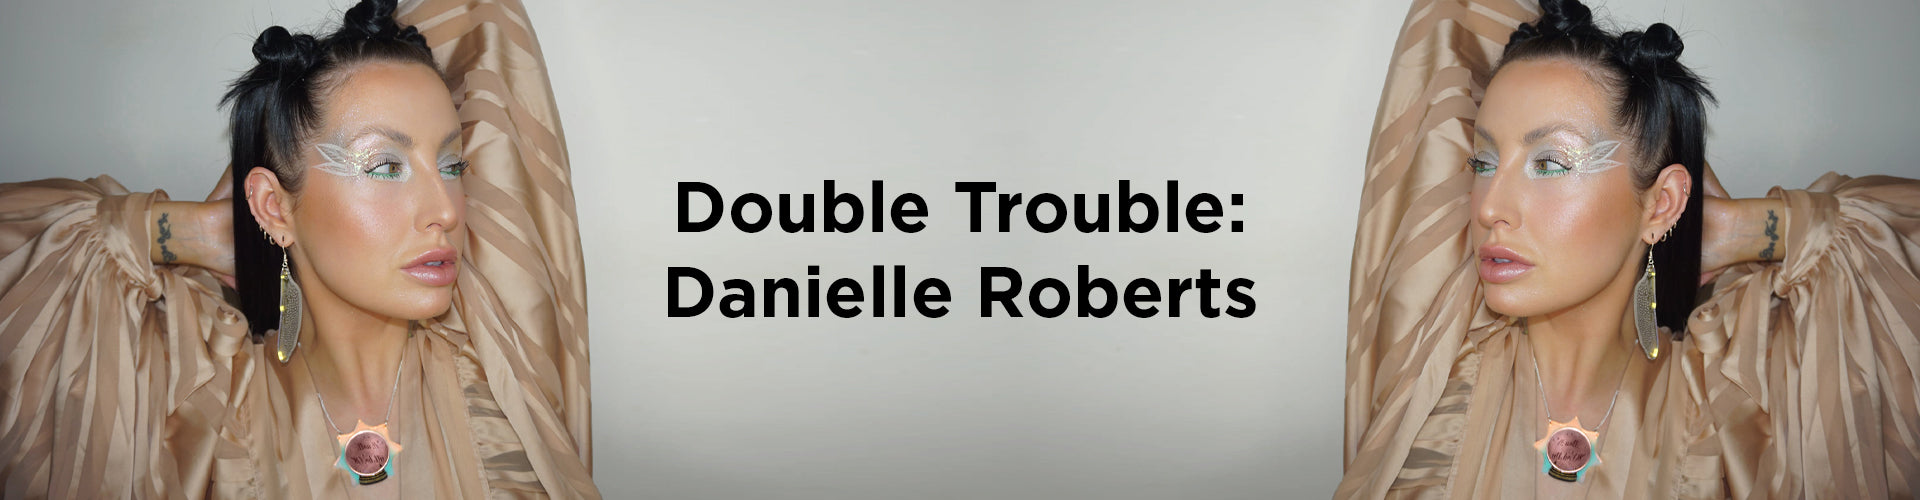 Double Trouble: Danielle Roberts